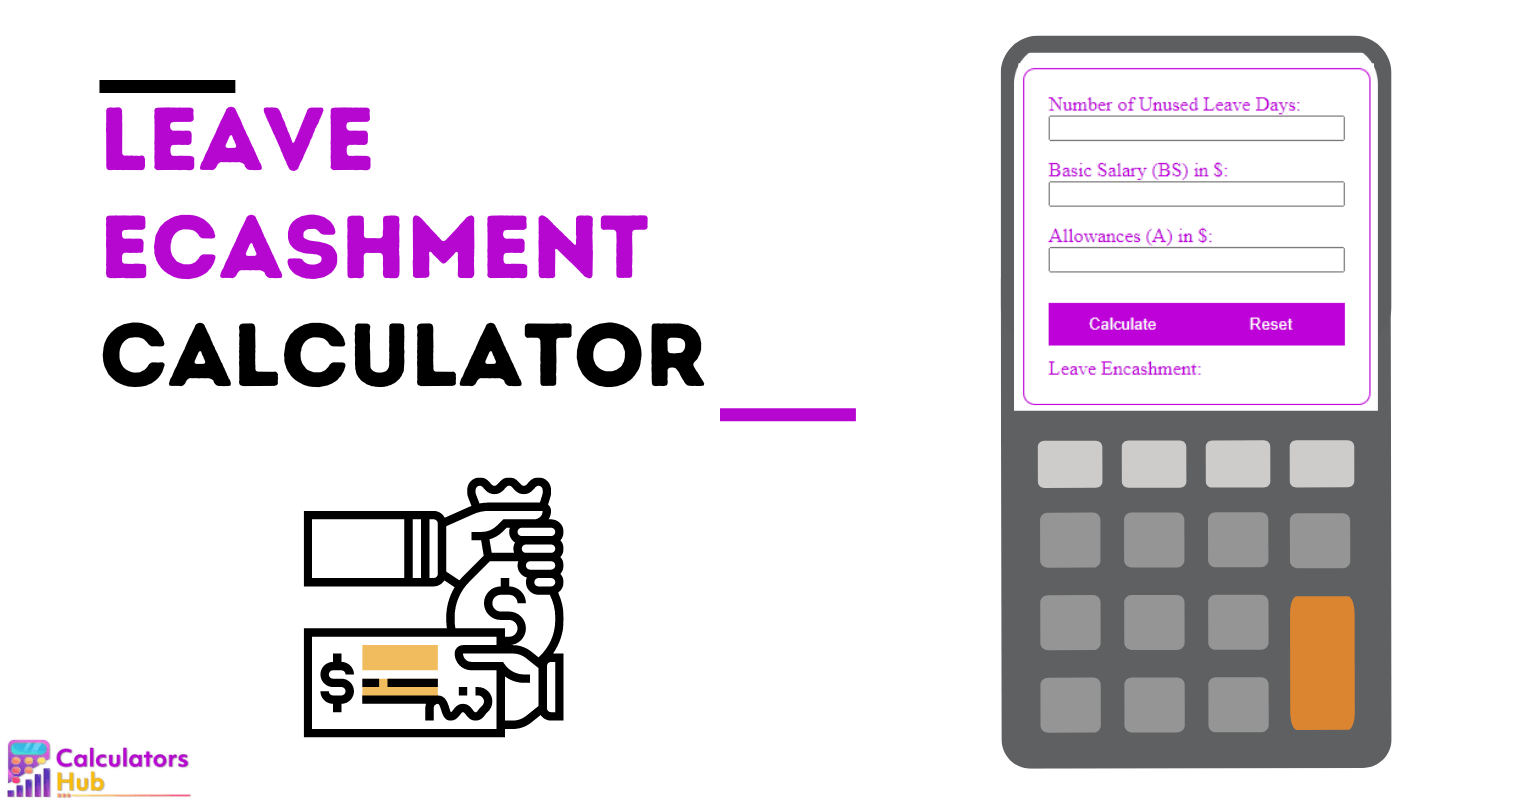 Leave Ecashment Calculator